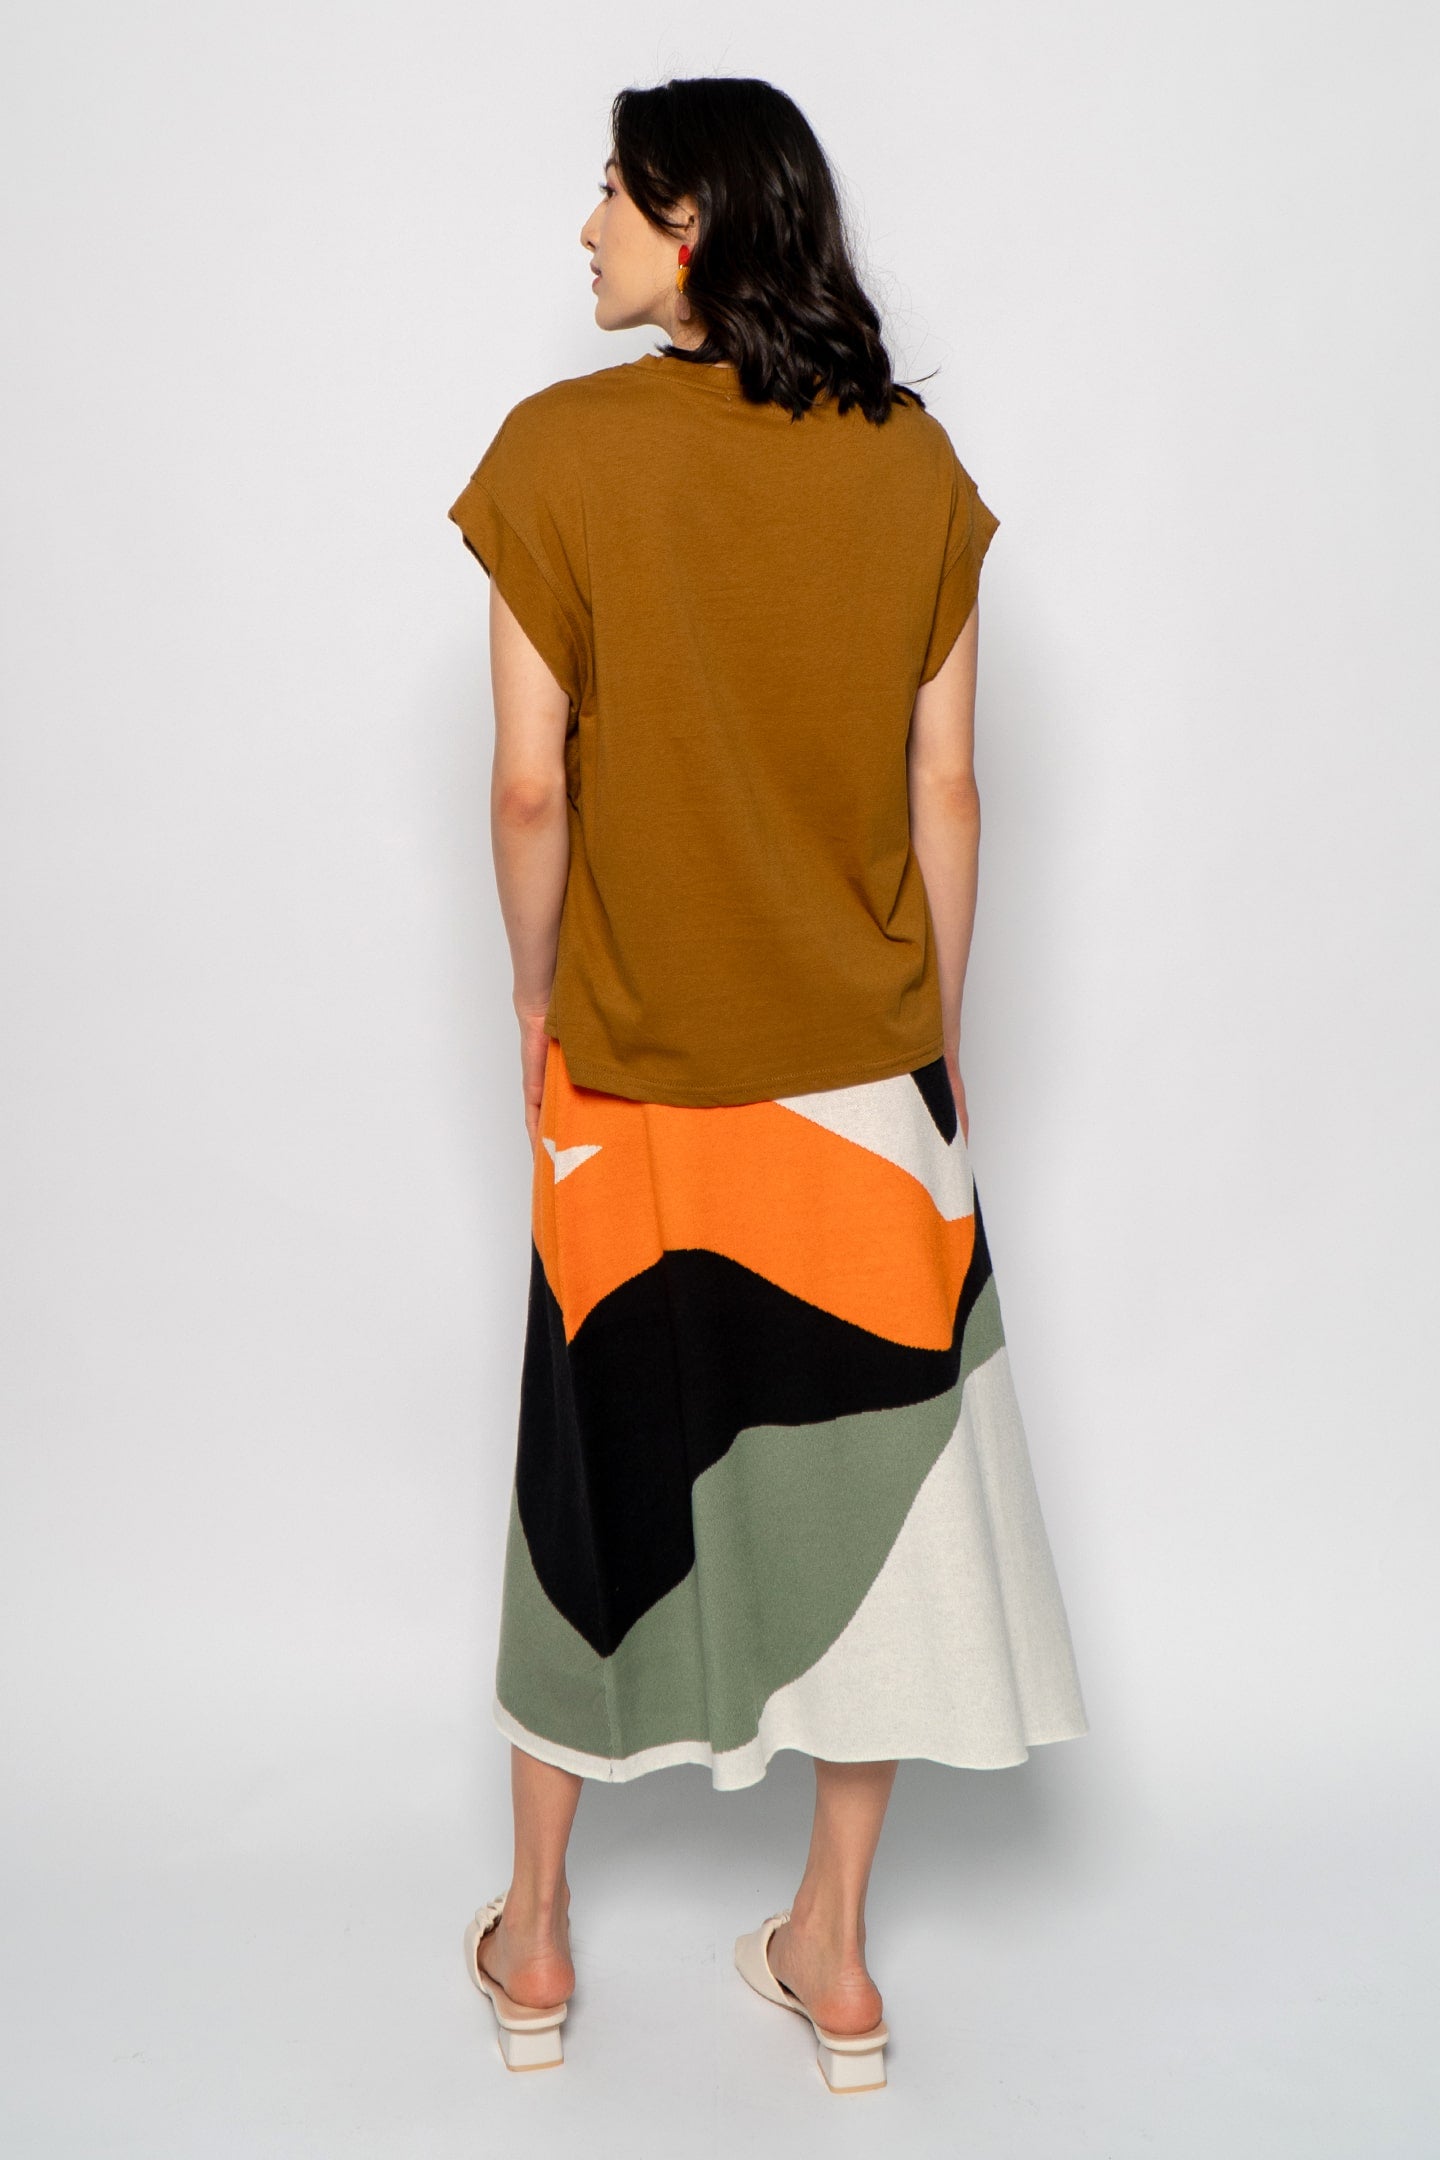 Ximmy Knit Skirt in Orange